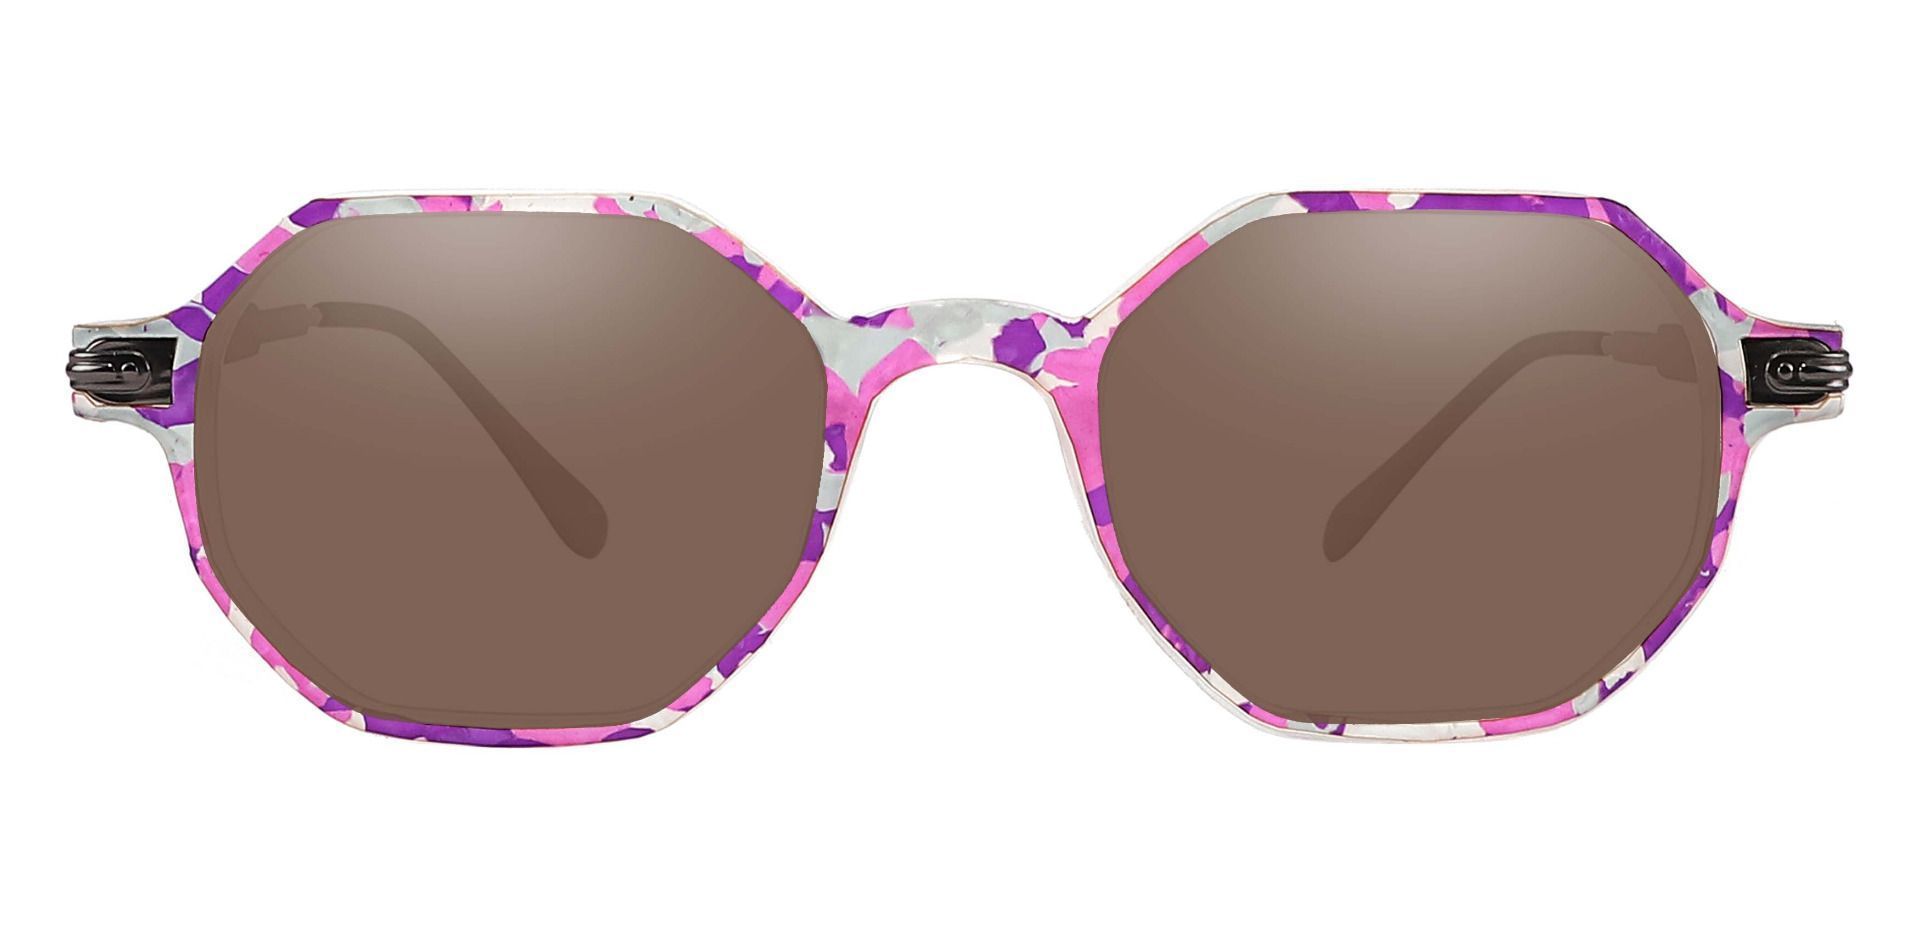 Bogart Geometric Progressive Sunglasses - Purple Frame With Brown Lenses